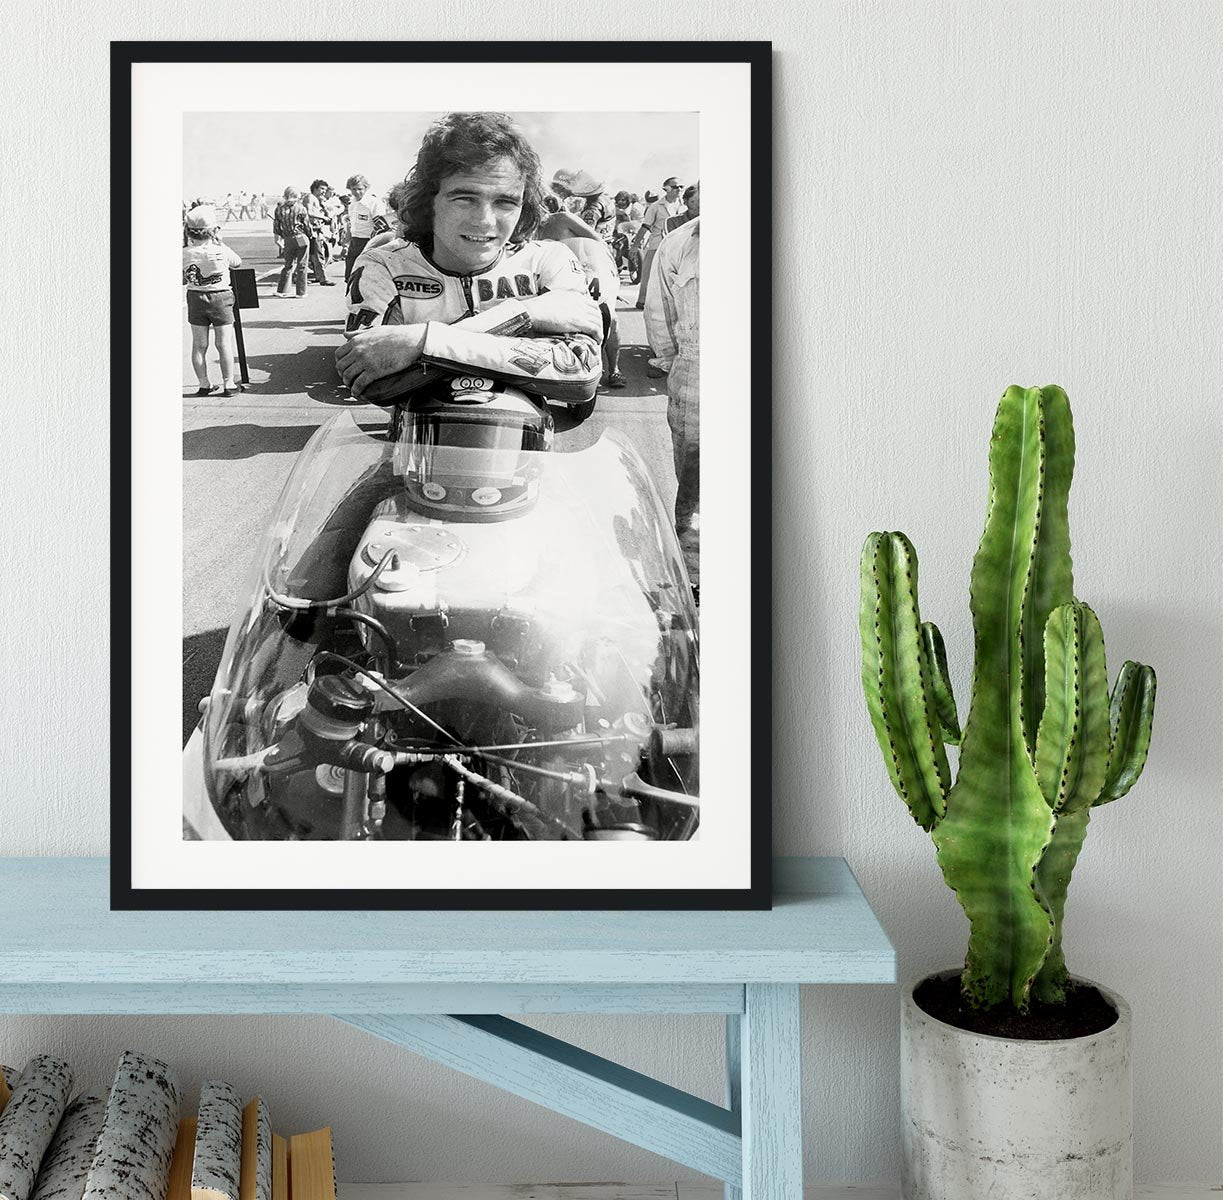 Barry Sheene motorcycle racing champion Framed Print - Canvas Art Rocks - 1